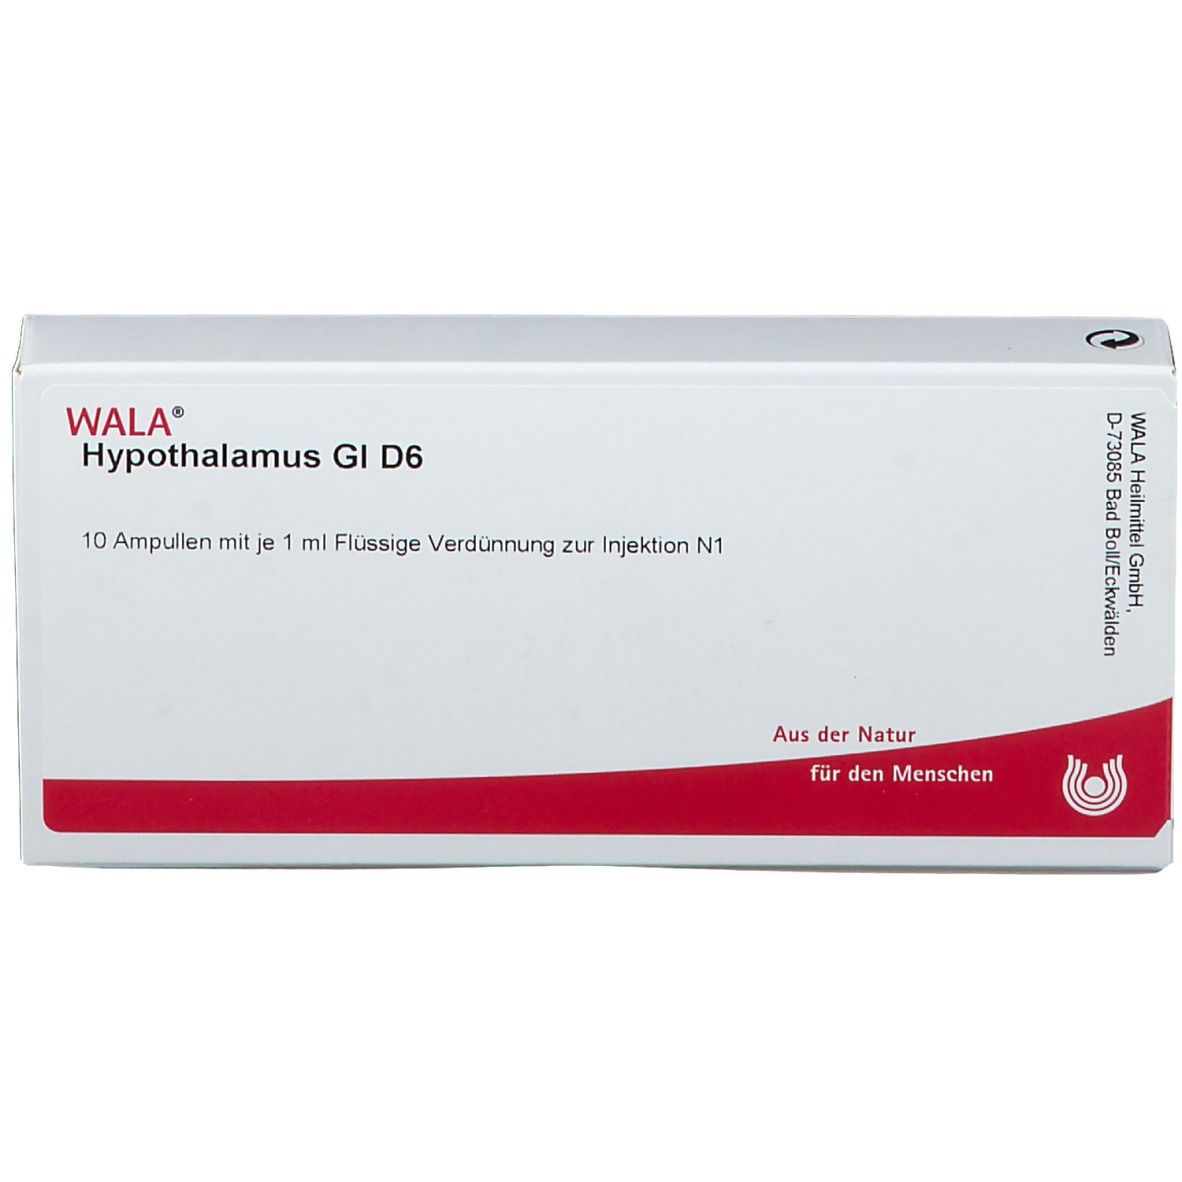 WALA® Hypothalamus Gl D 6